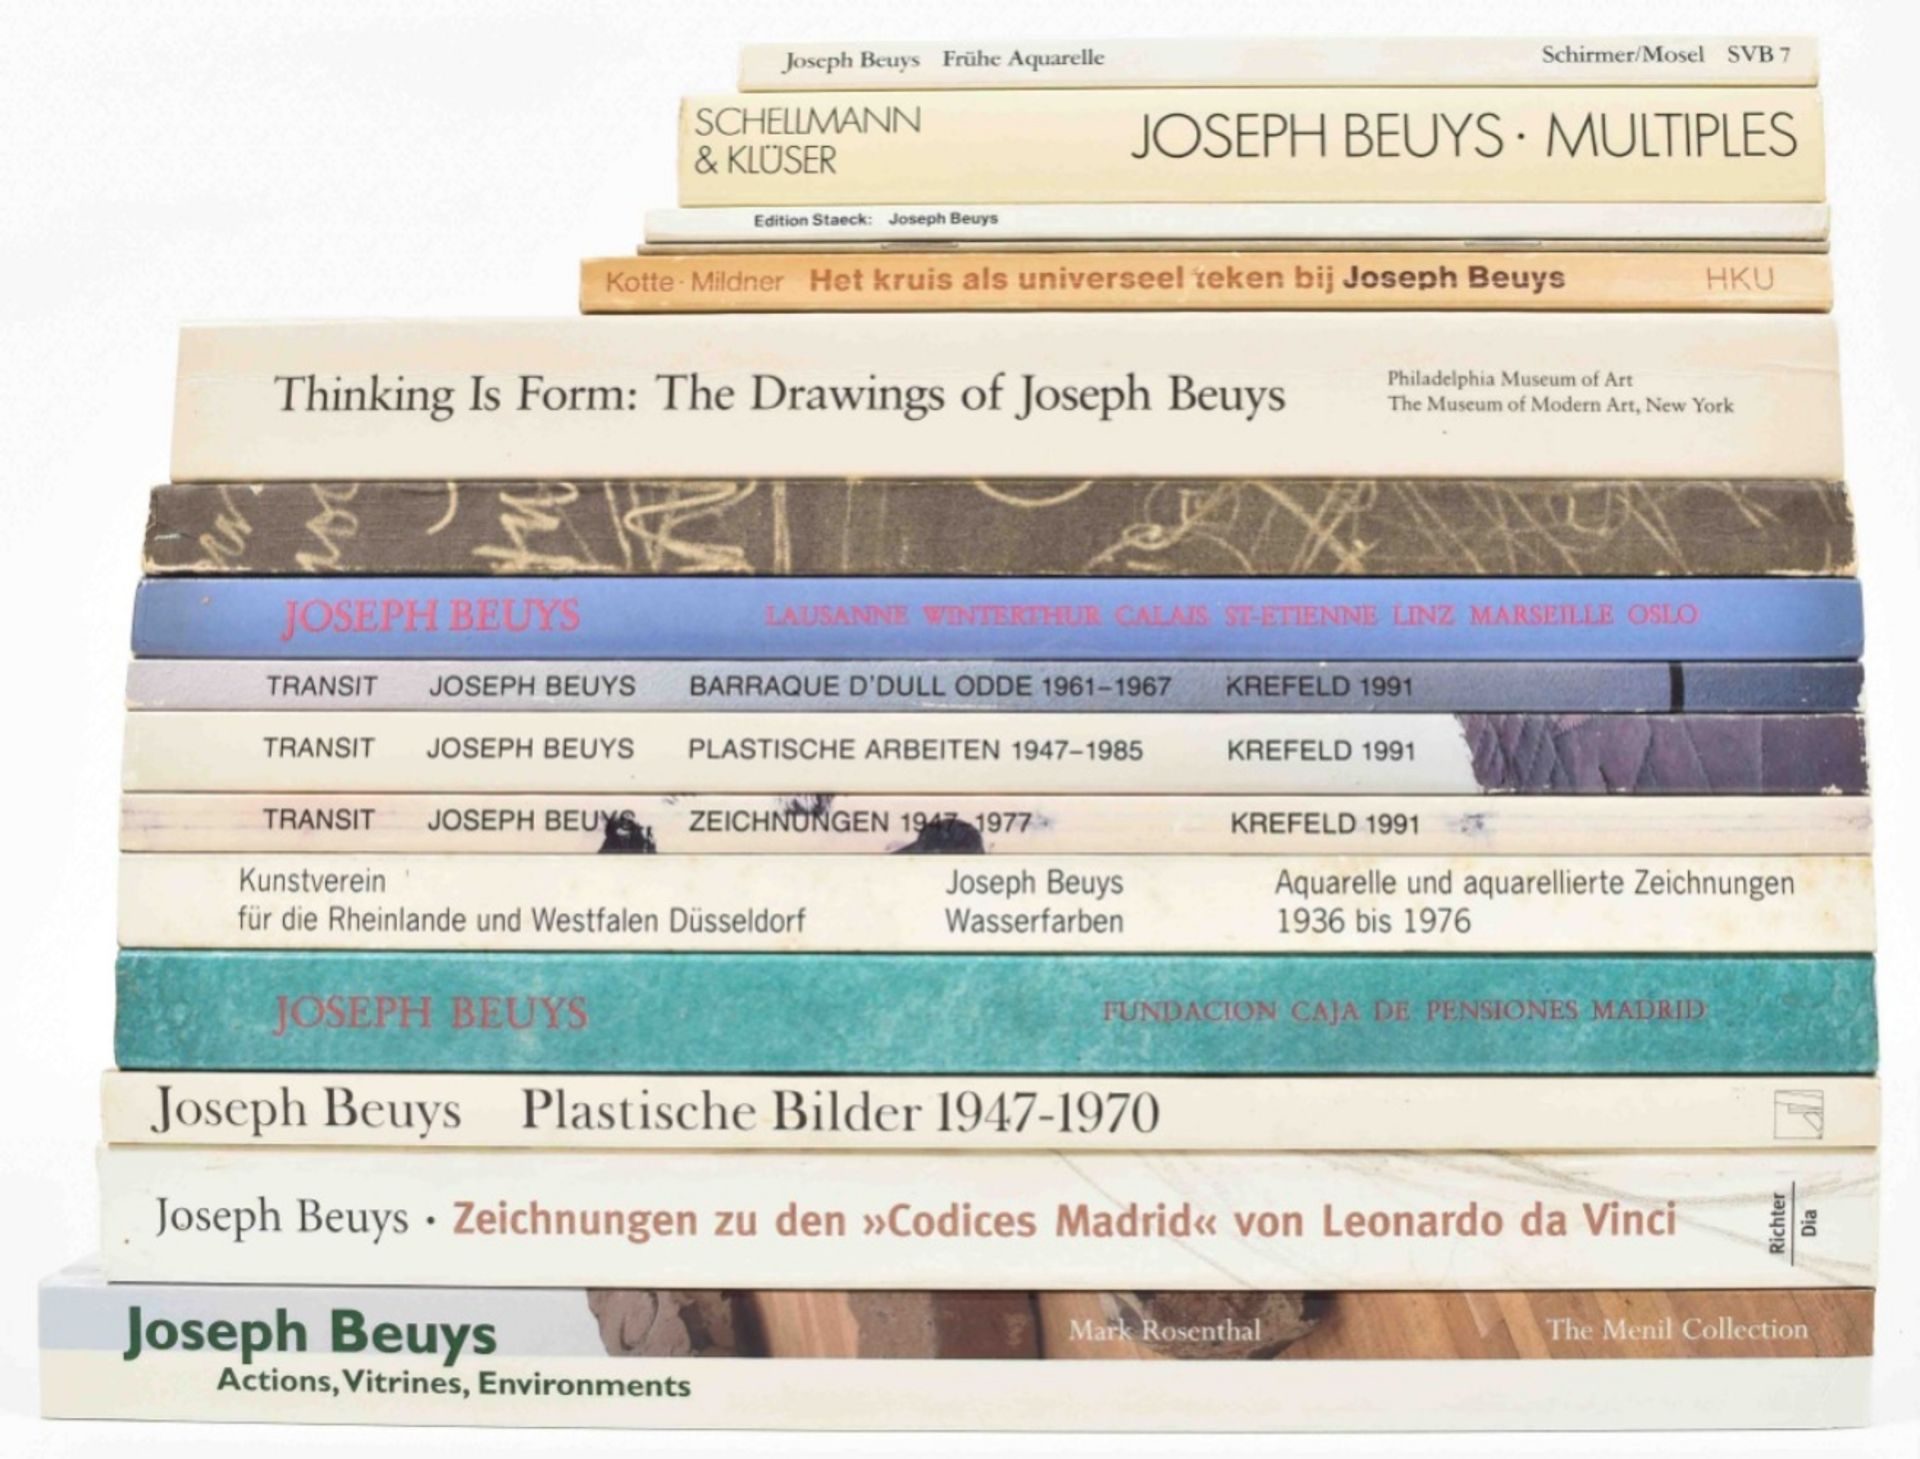 15 titles on Joseph Beuys: Joseph Beuys: The secret block for a secret person